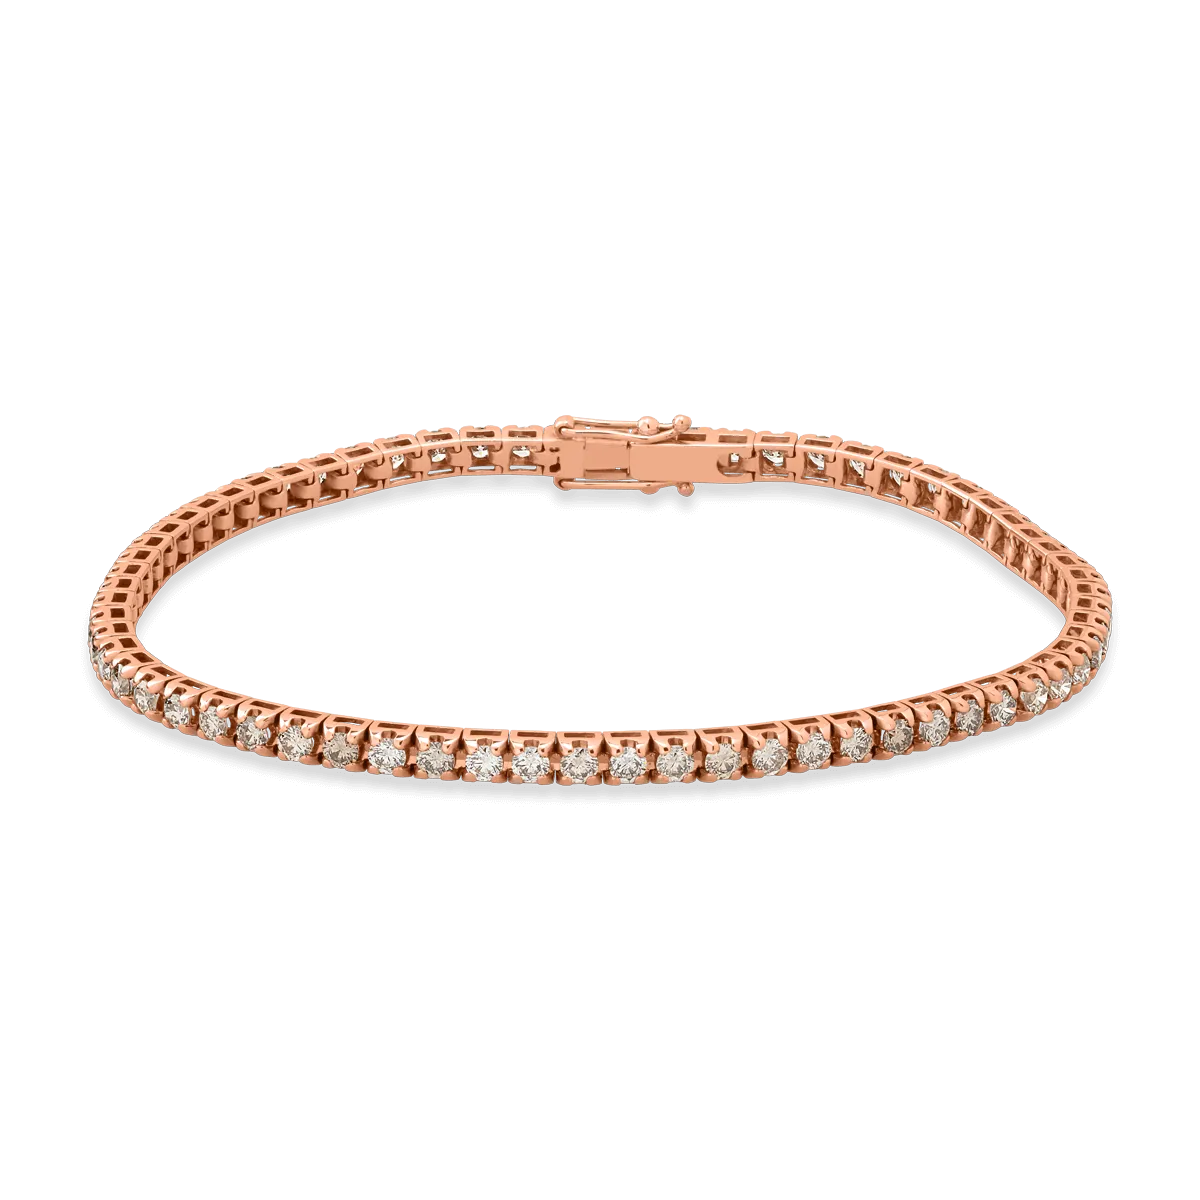 18K rose gold bracelet with 5.2ct brown diamonds